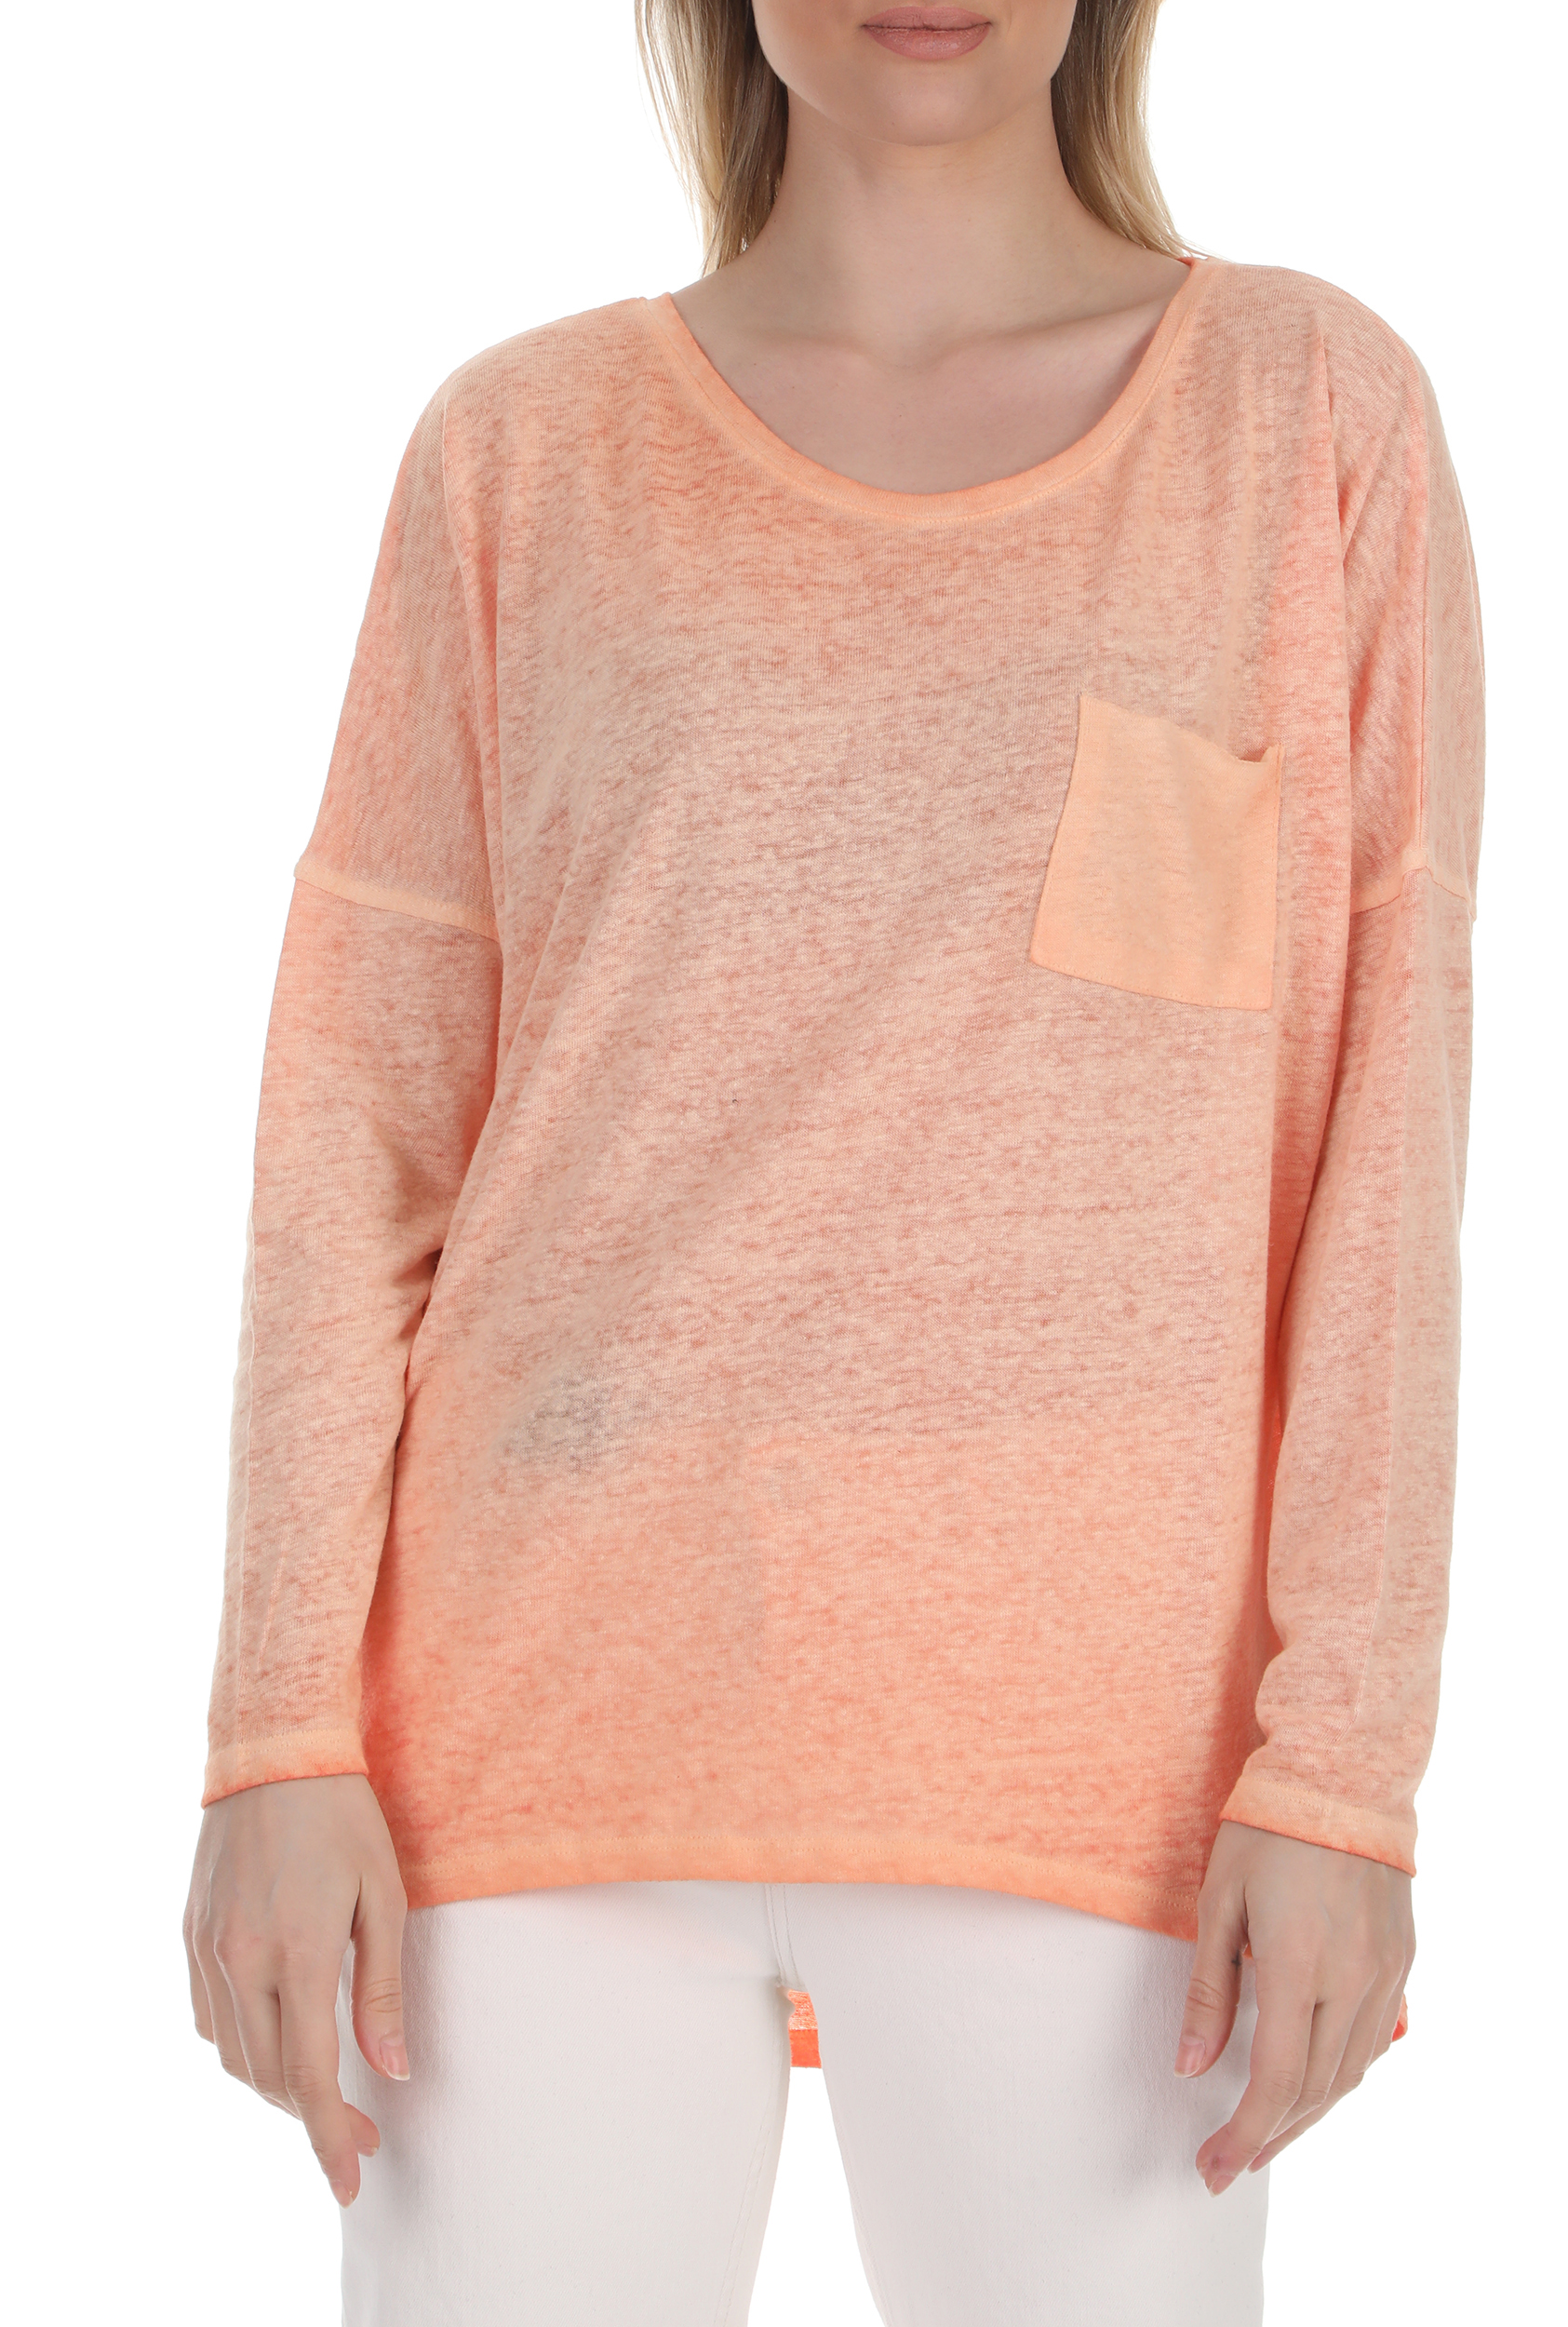 COTTON CANDY - Γυναικεία μπλούζα COTTON CANDY OIL-DYE LINNEN πορτοκαλί Γυναικεία/Ρούχα/Μπλούζες/Μακρυμάνικες